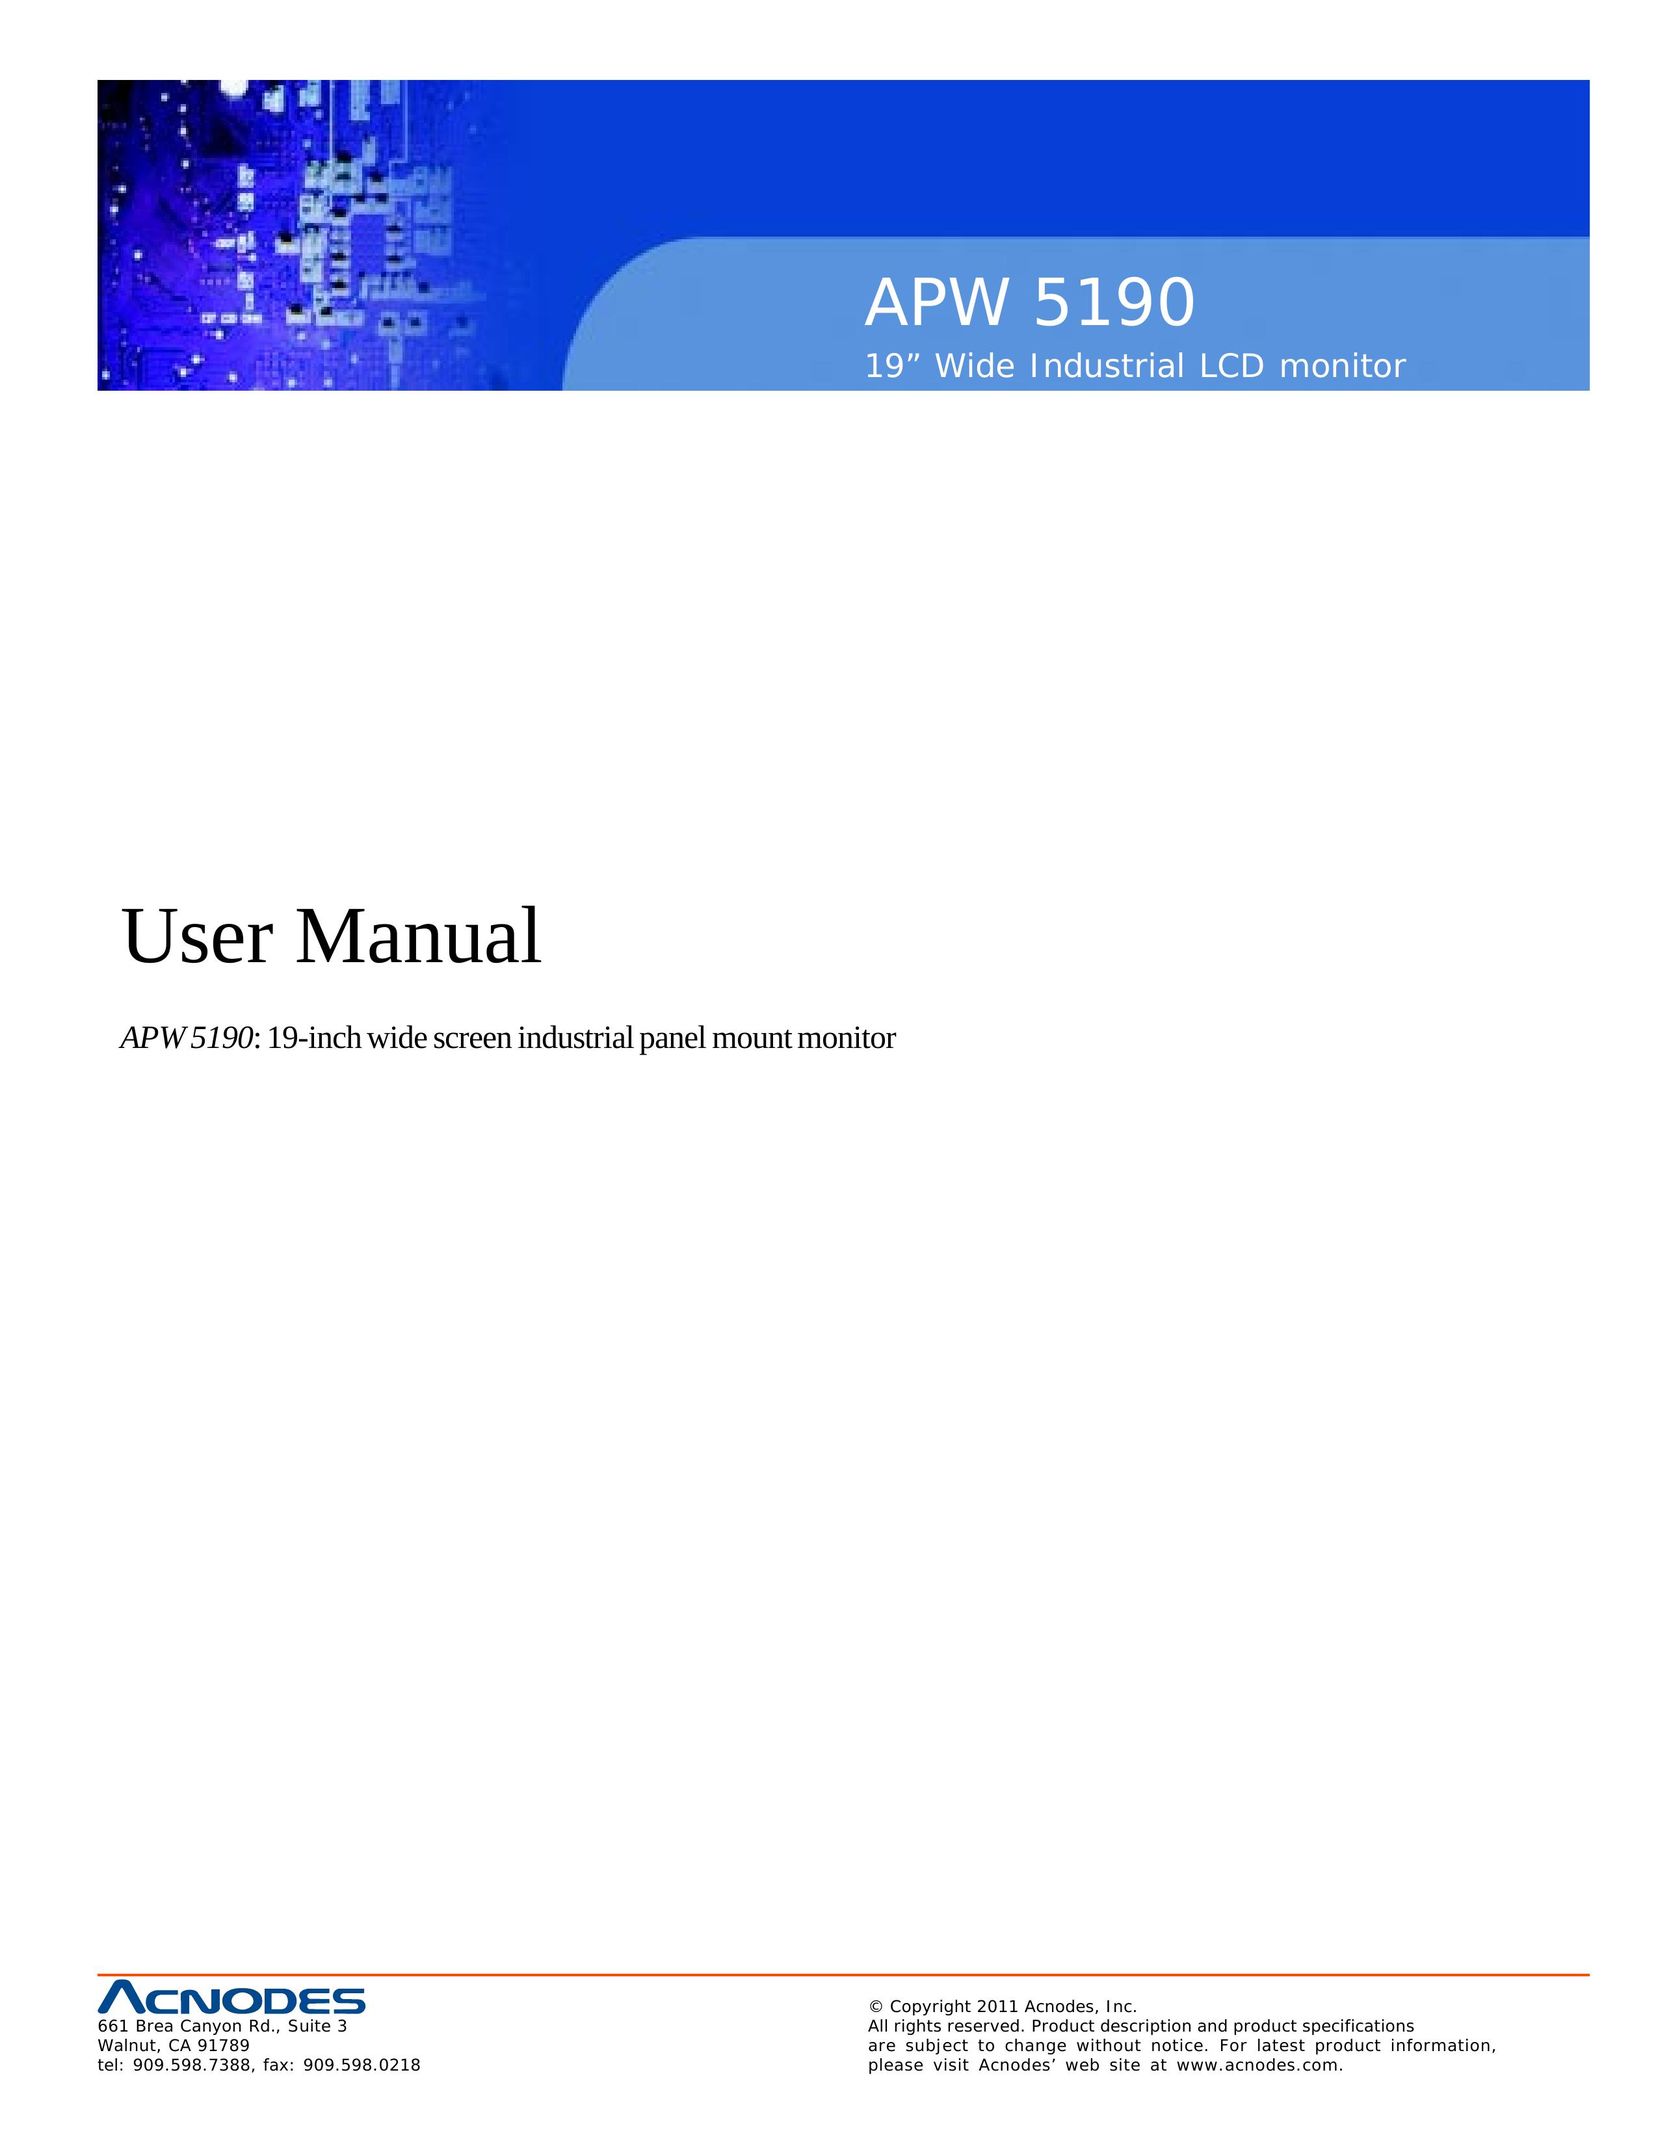 Acnodes APW 5190 Computer Monitor User Manual